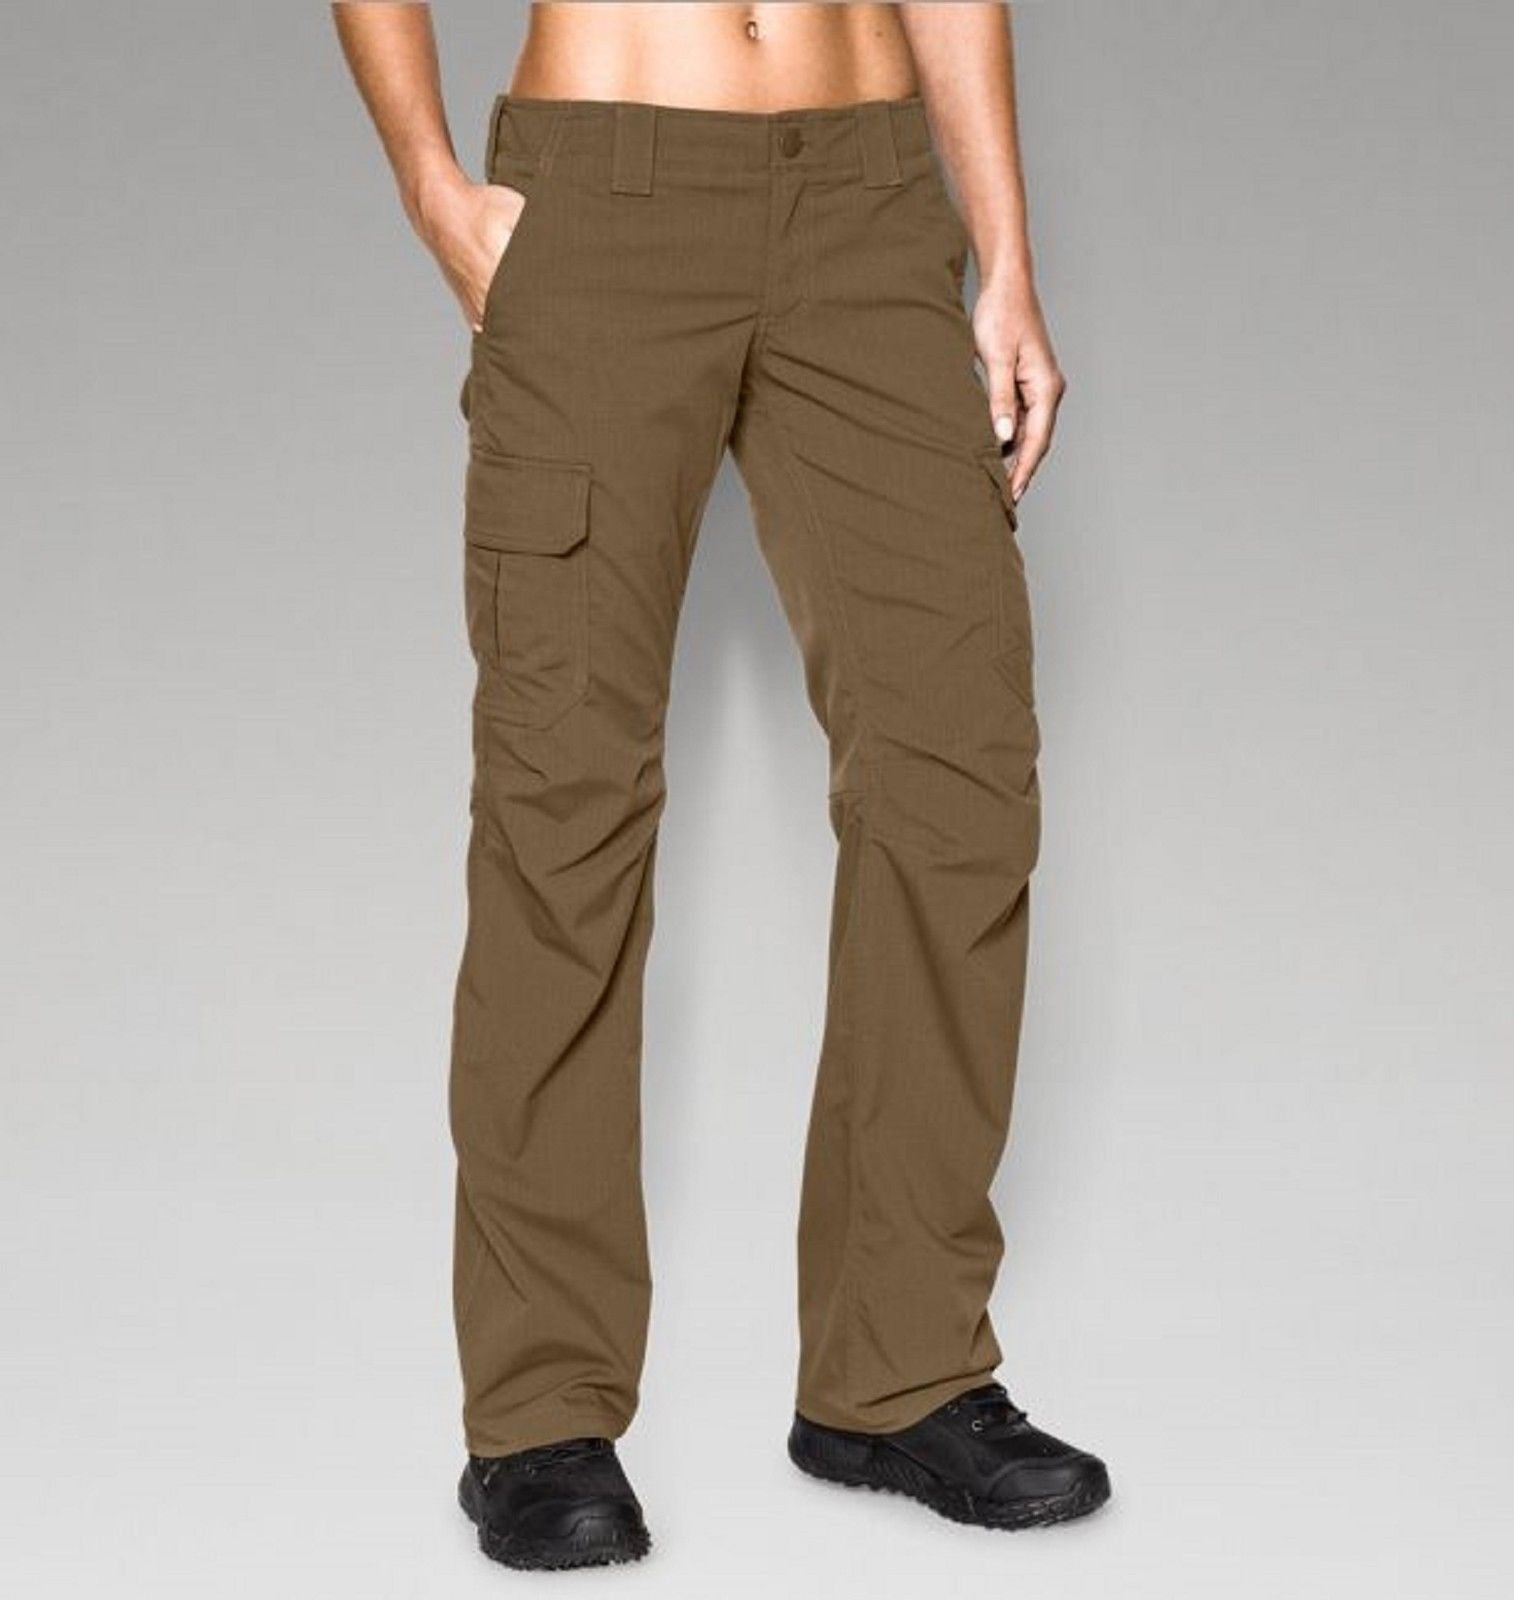 Under Armour STORM Tactical Patrol Pants Loose Fit Water Resistant Women's  12